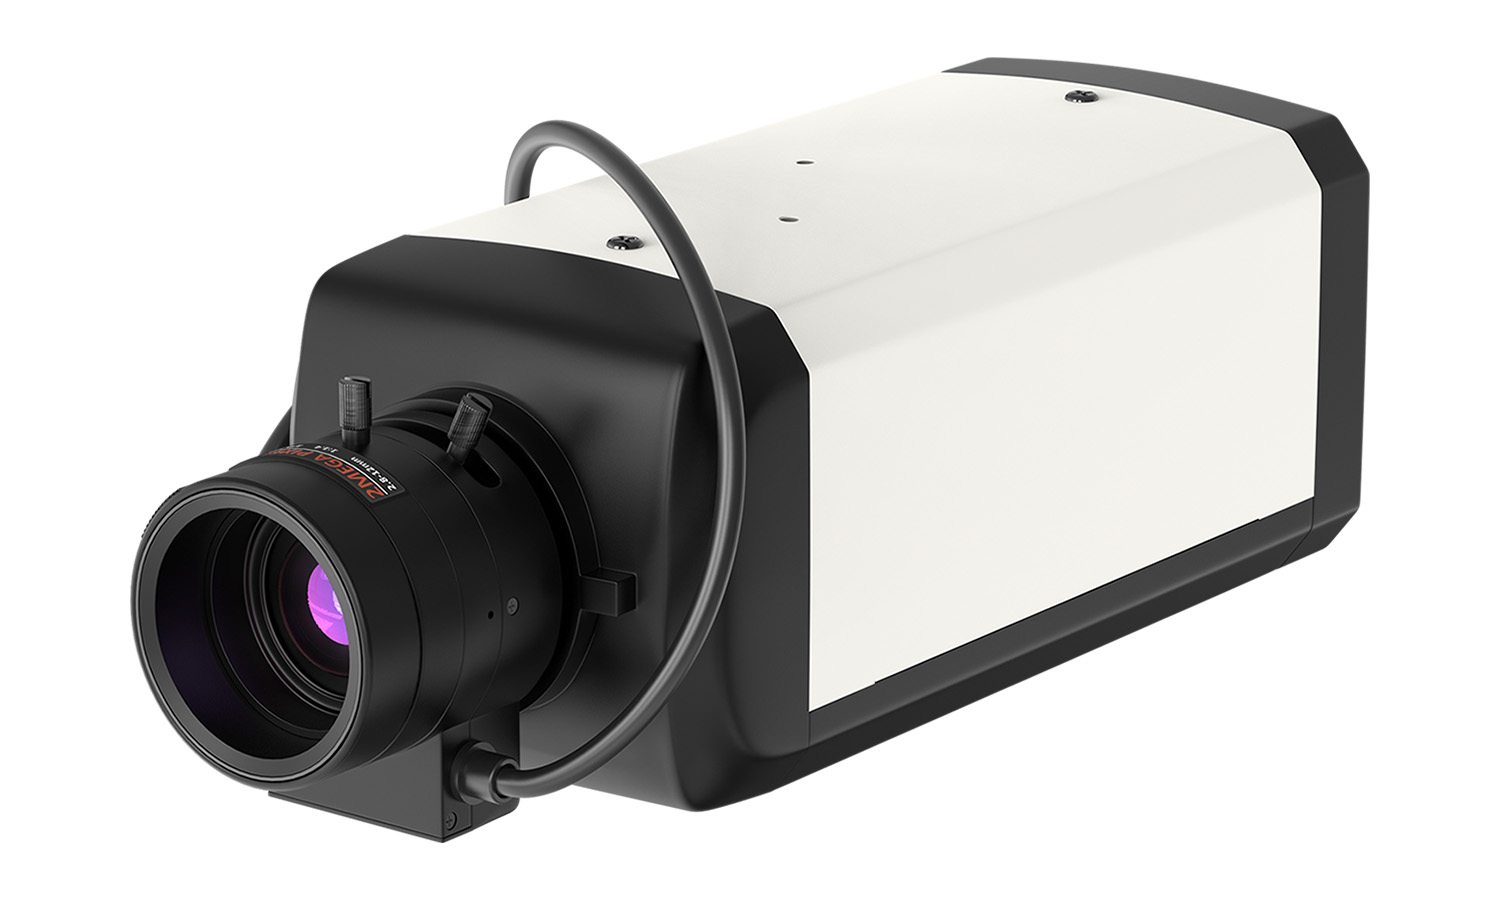 BZBGEAR BG-BFS Full HD SDI IP Streaming Bullet Camera with 4X Optical Zoom Lens